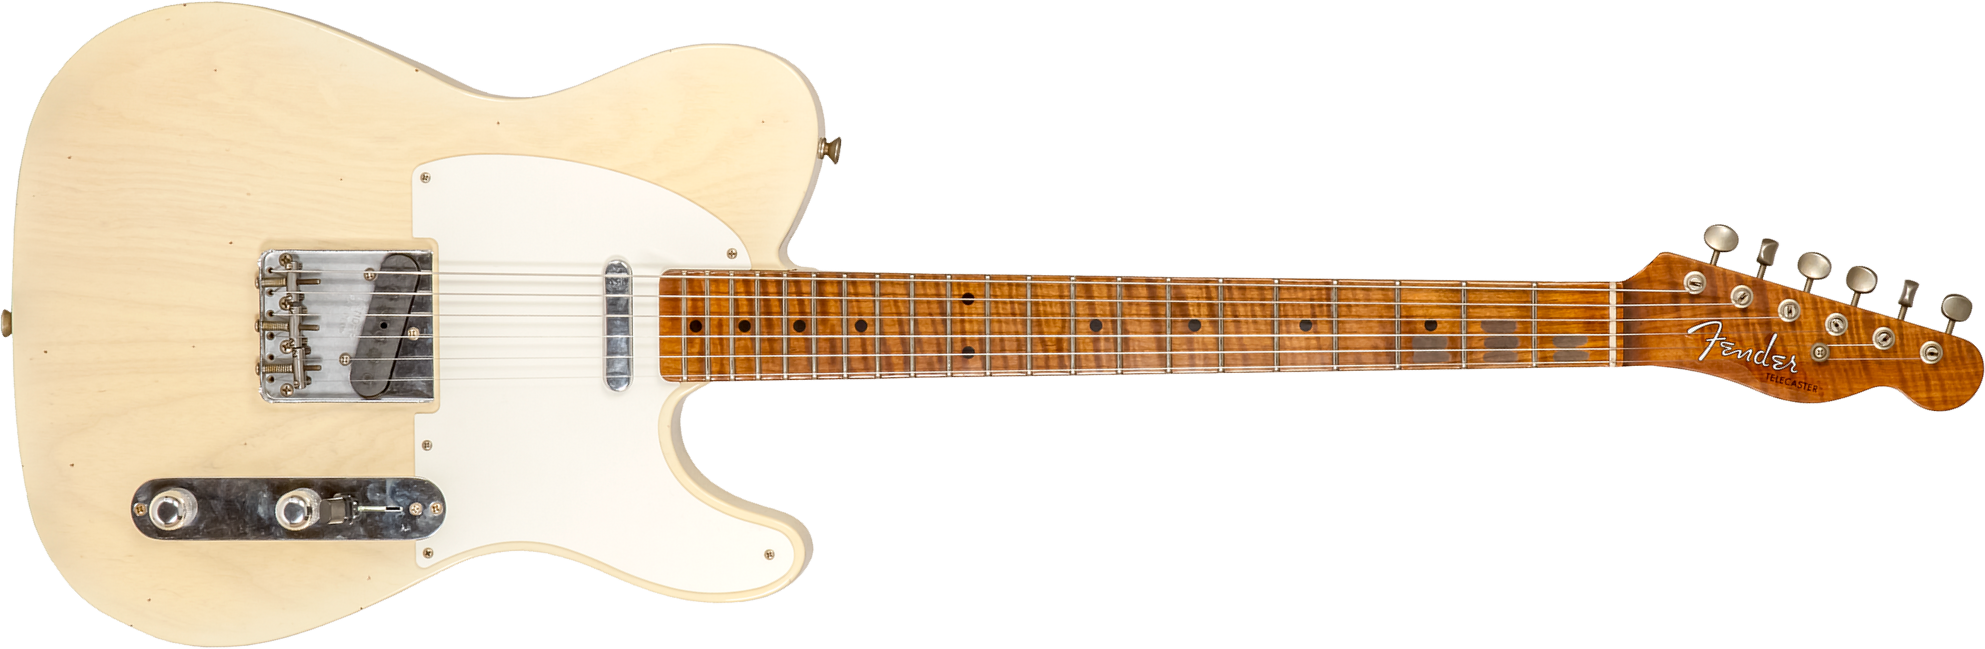 Fender Custom Shop Tele 1955 2s Ht Mn #cz573416 - Journeyman Relic Nocaster Blonde - Televorm elektrische gitaar - Main picture